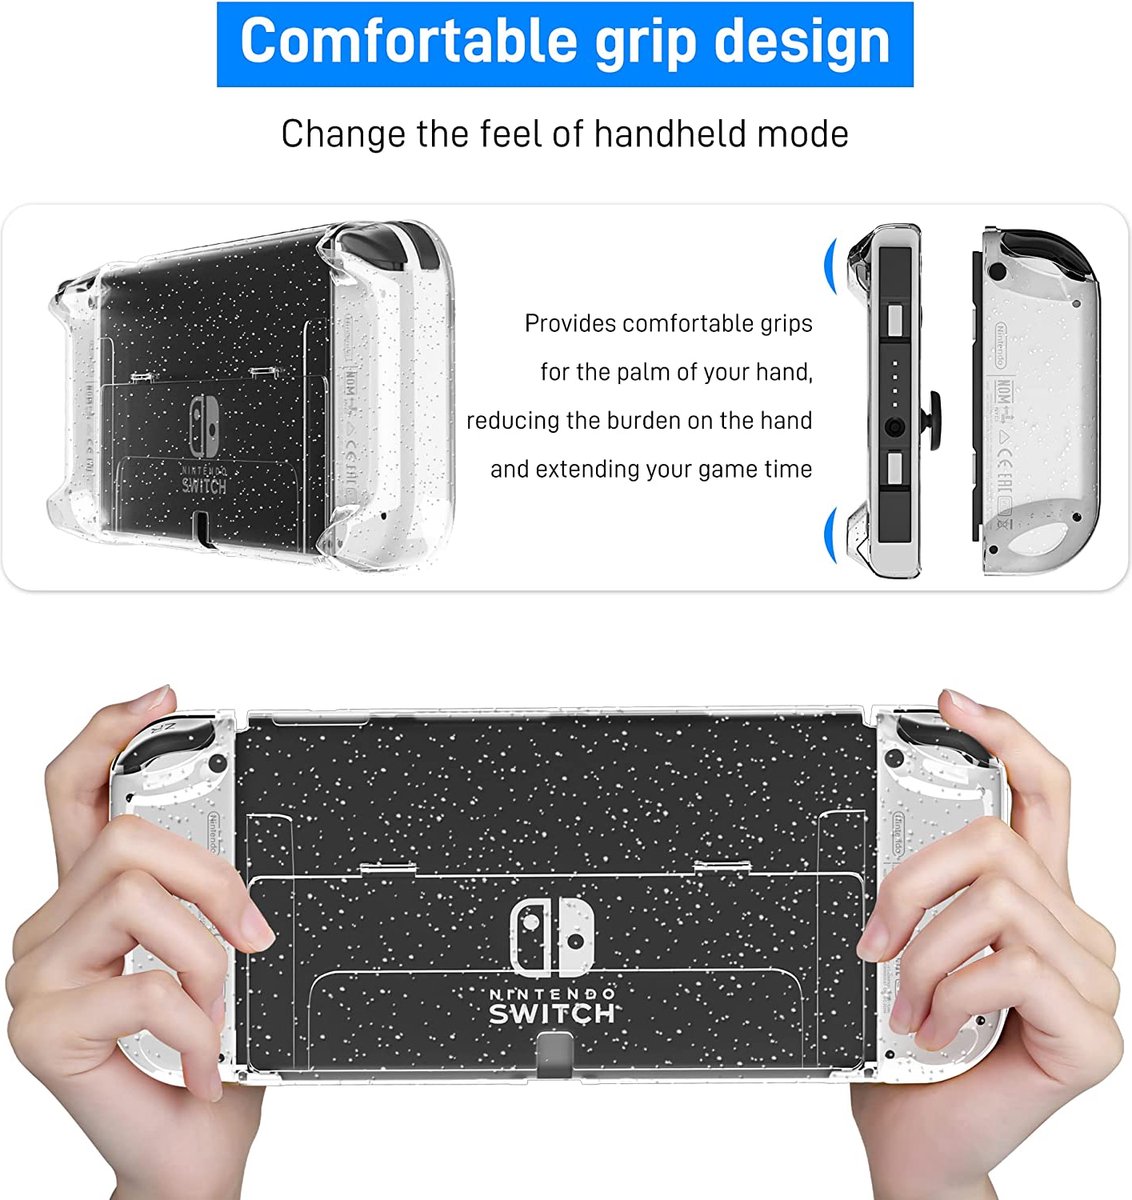 Coque Nintendo Switch OLED - Coque de protection TPU - Blauw